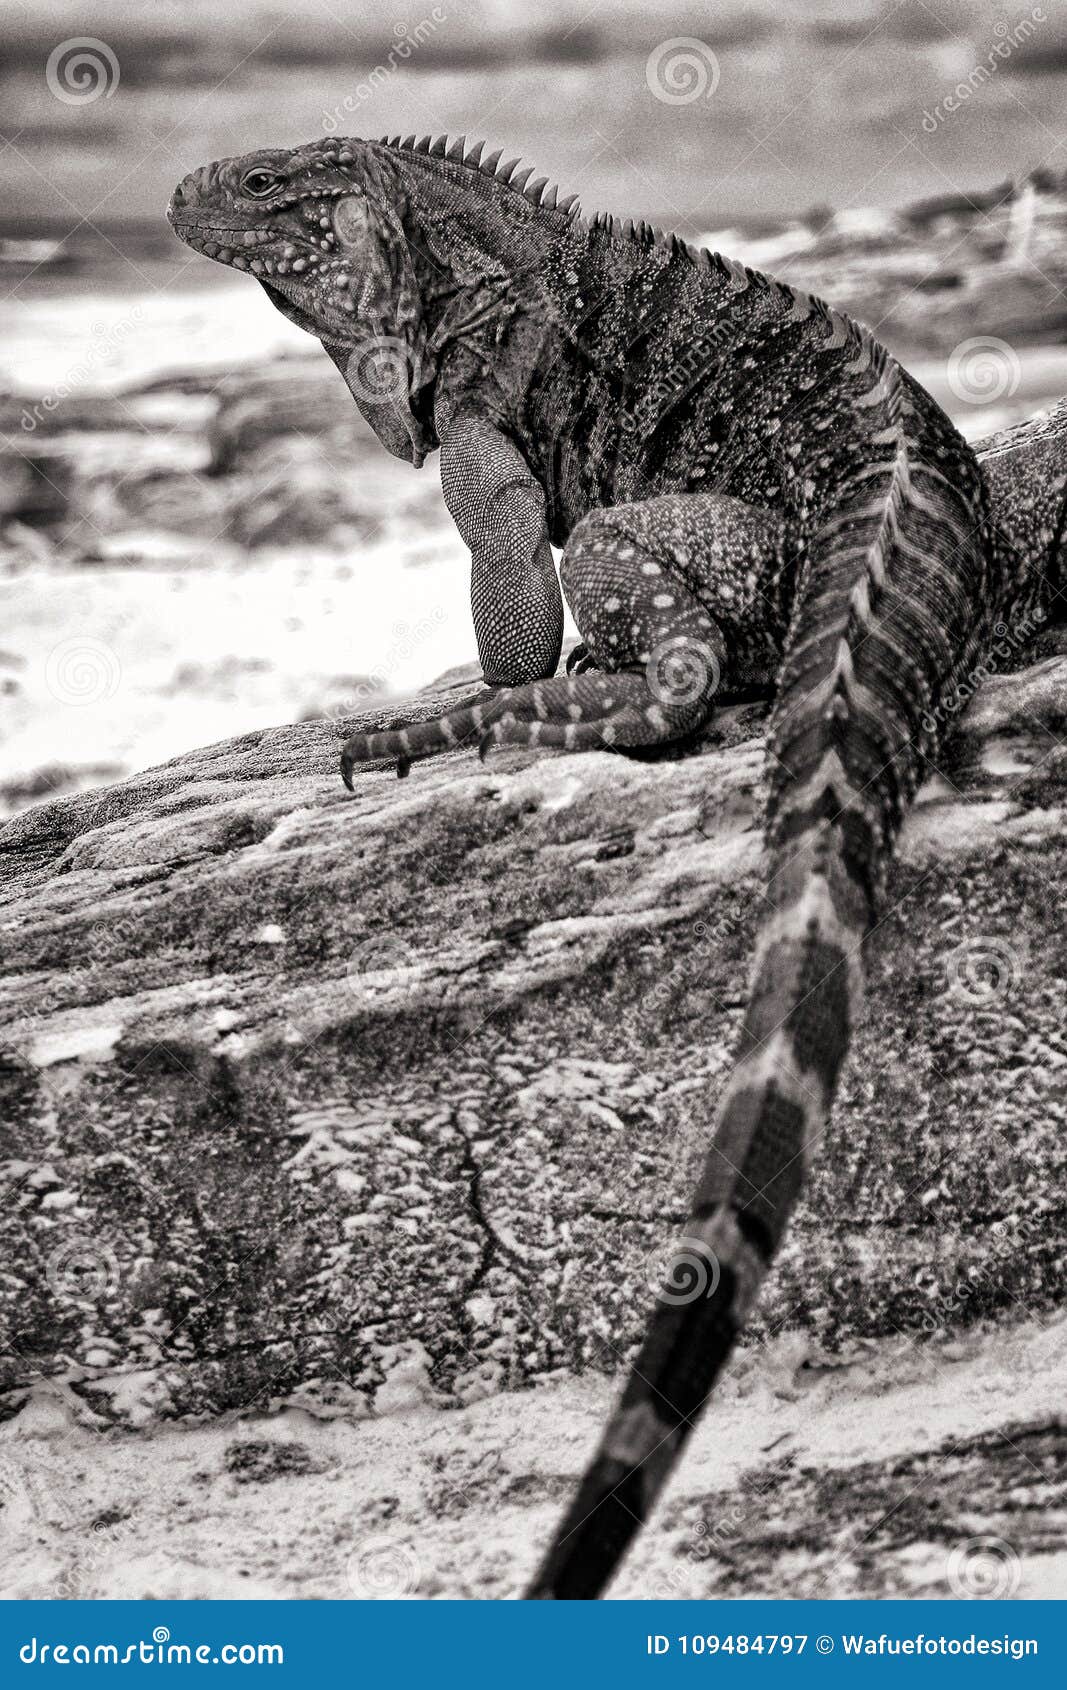 cuban iguana